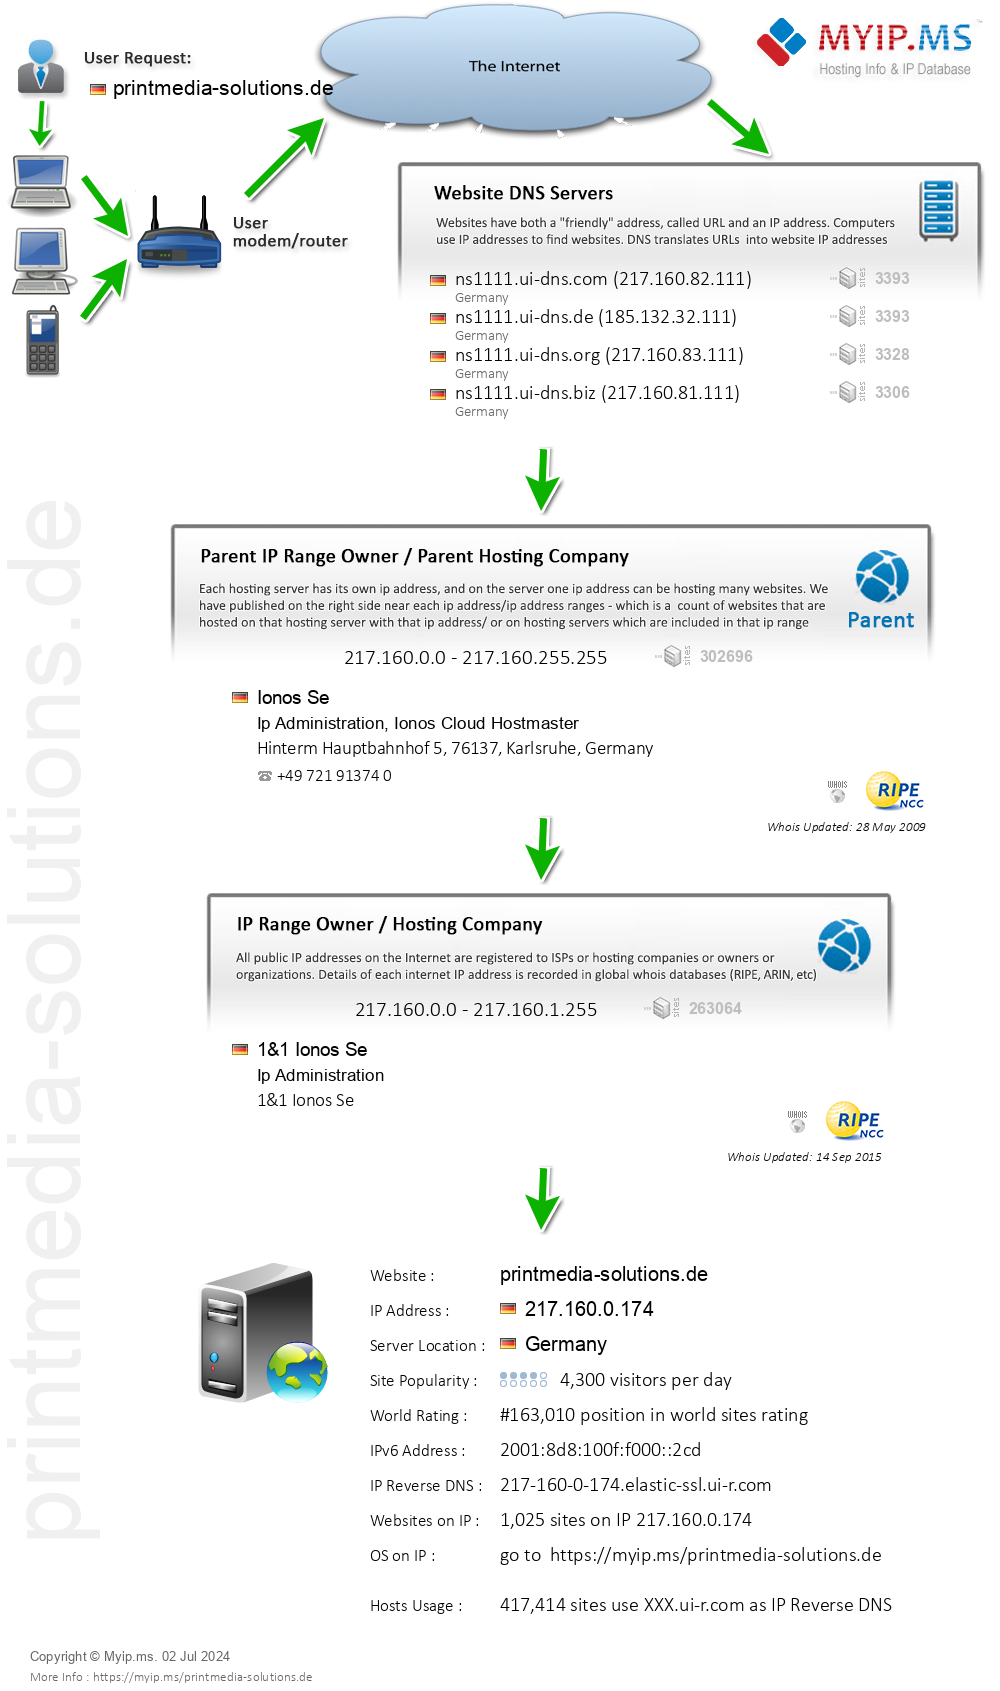 Printmedia-solutions.de - Website Hosting Visual IP Diagram